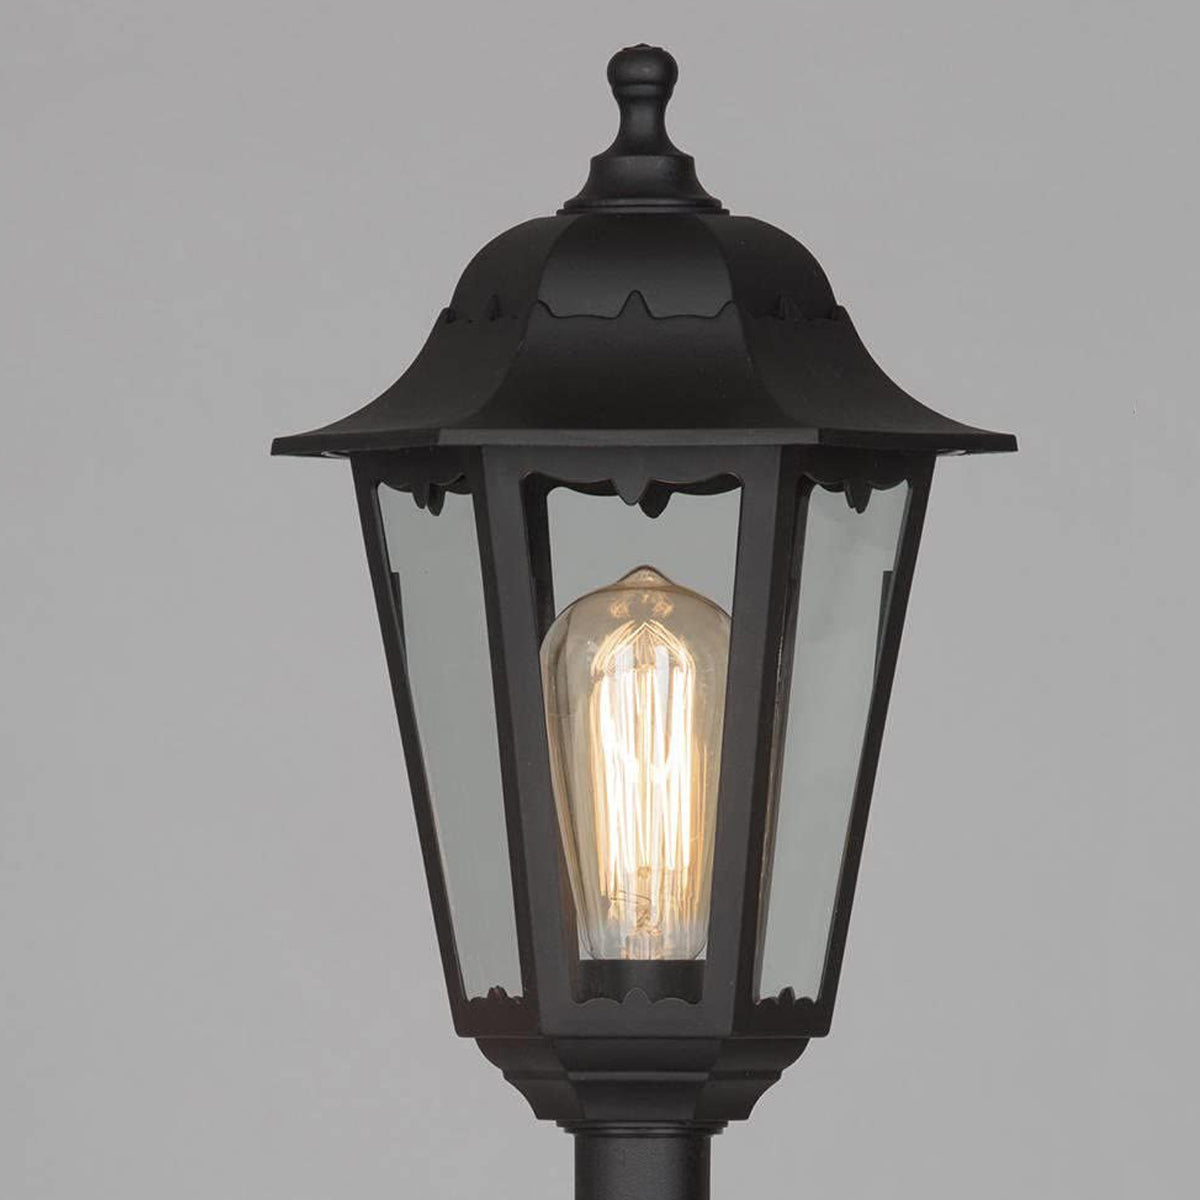 CGC BEATRICE 3 in 1 Black Vintage Lantern Post Pedestal Light